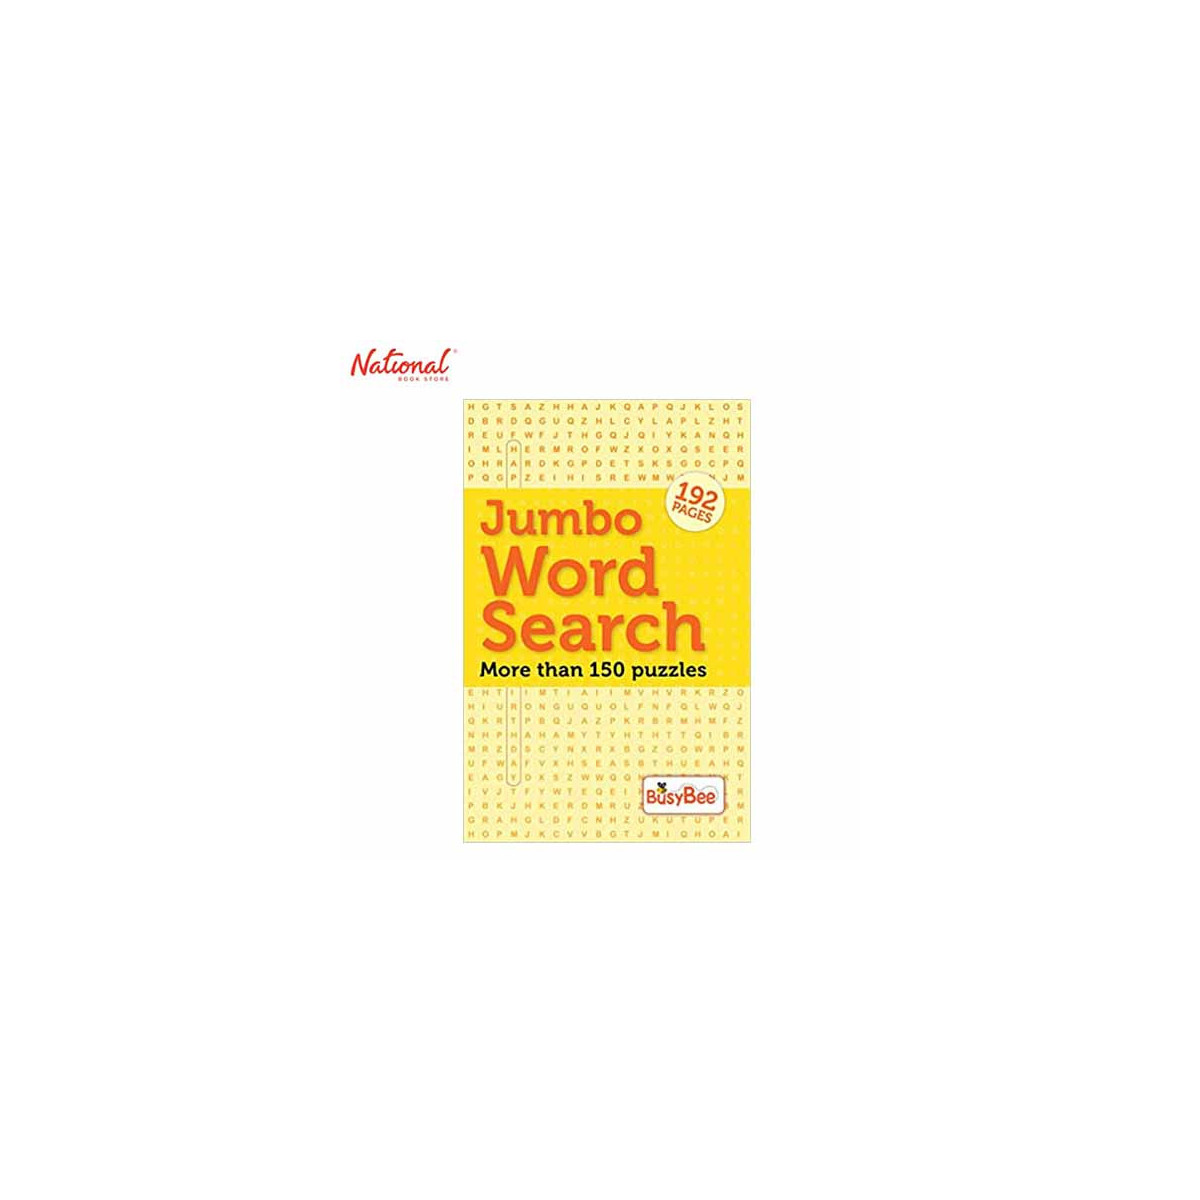 Jumbo Word Search Trade Paperback by Pegasus